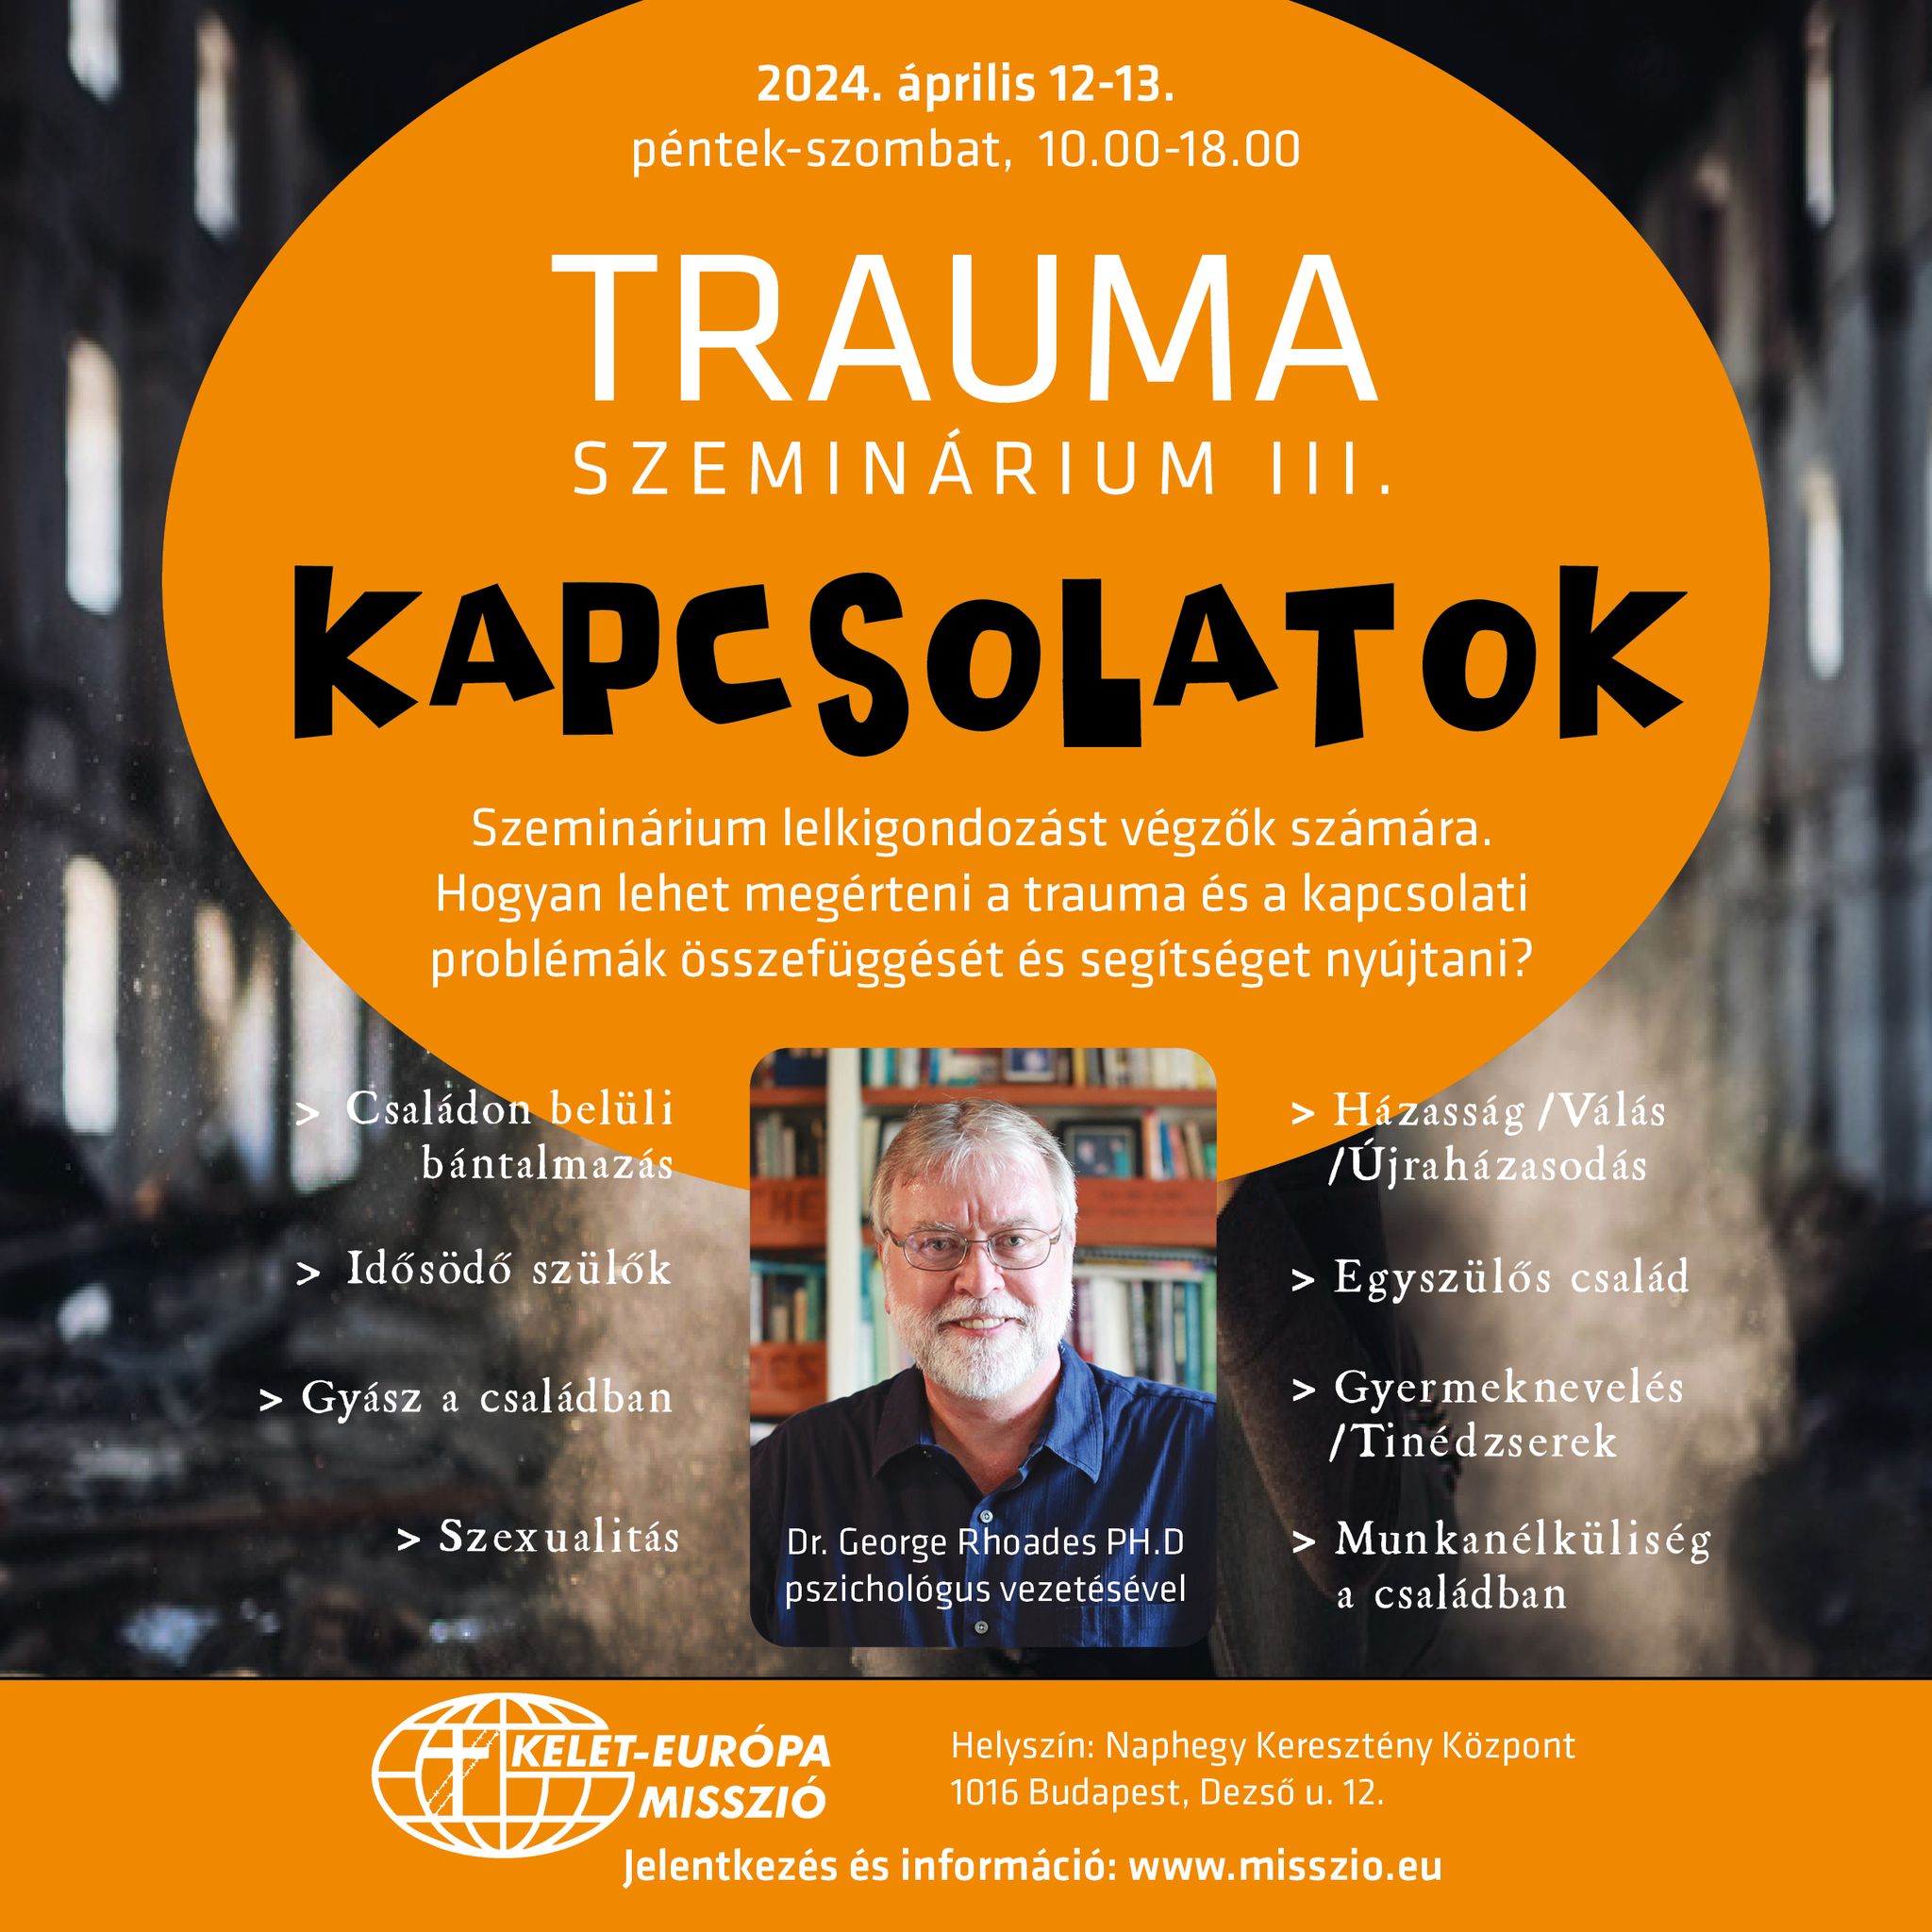 Trauma szeminárium III. – Kapcsolatok